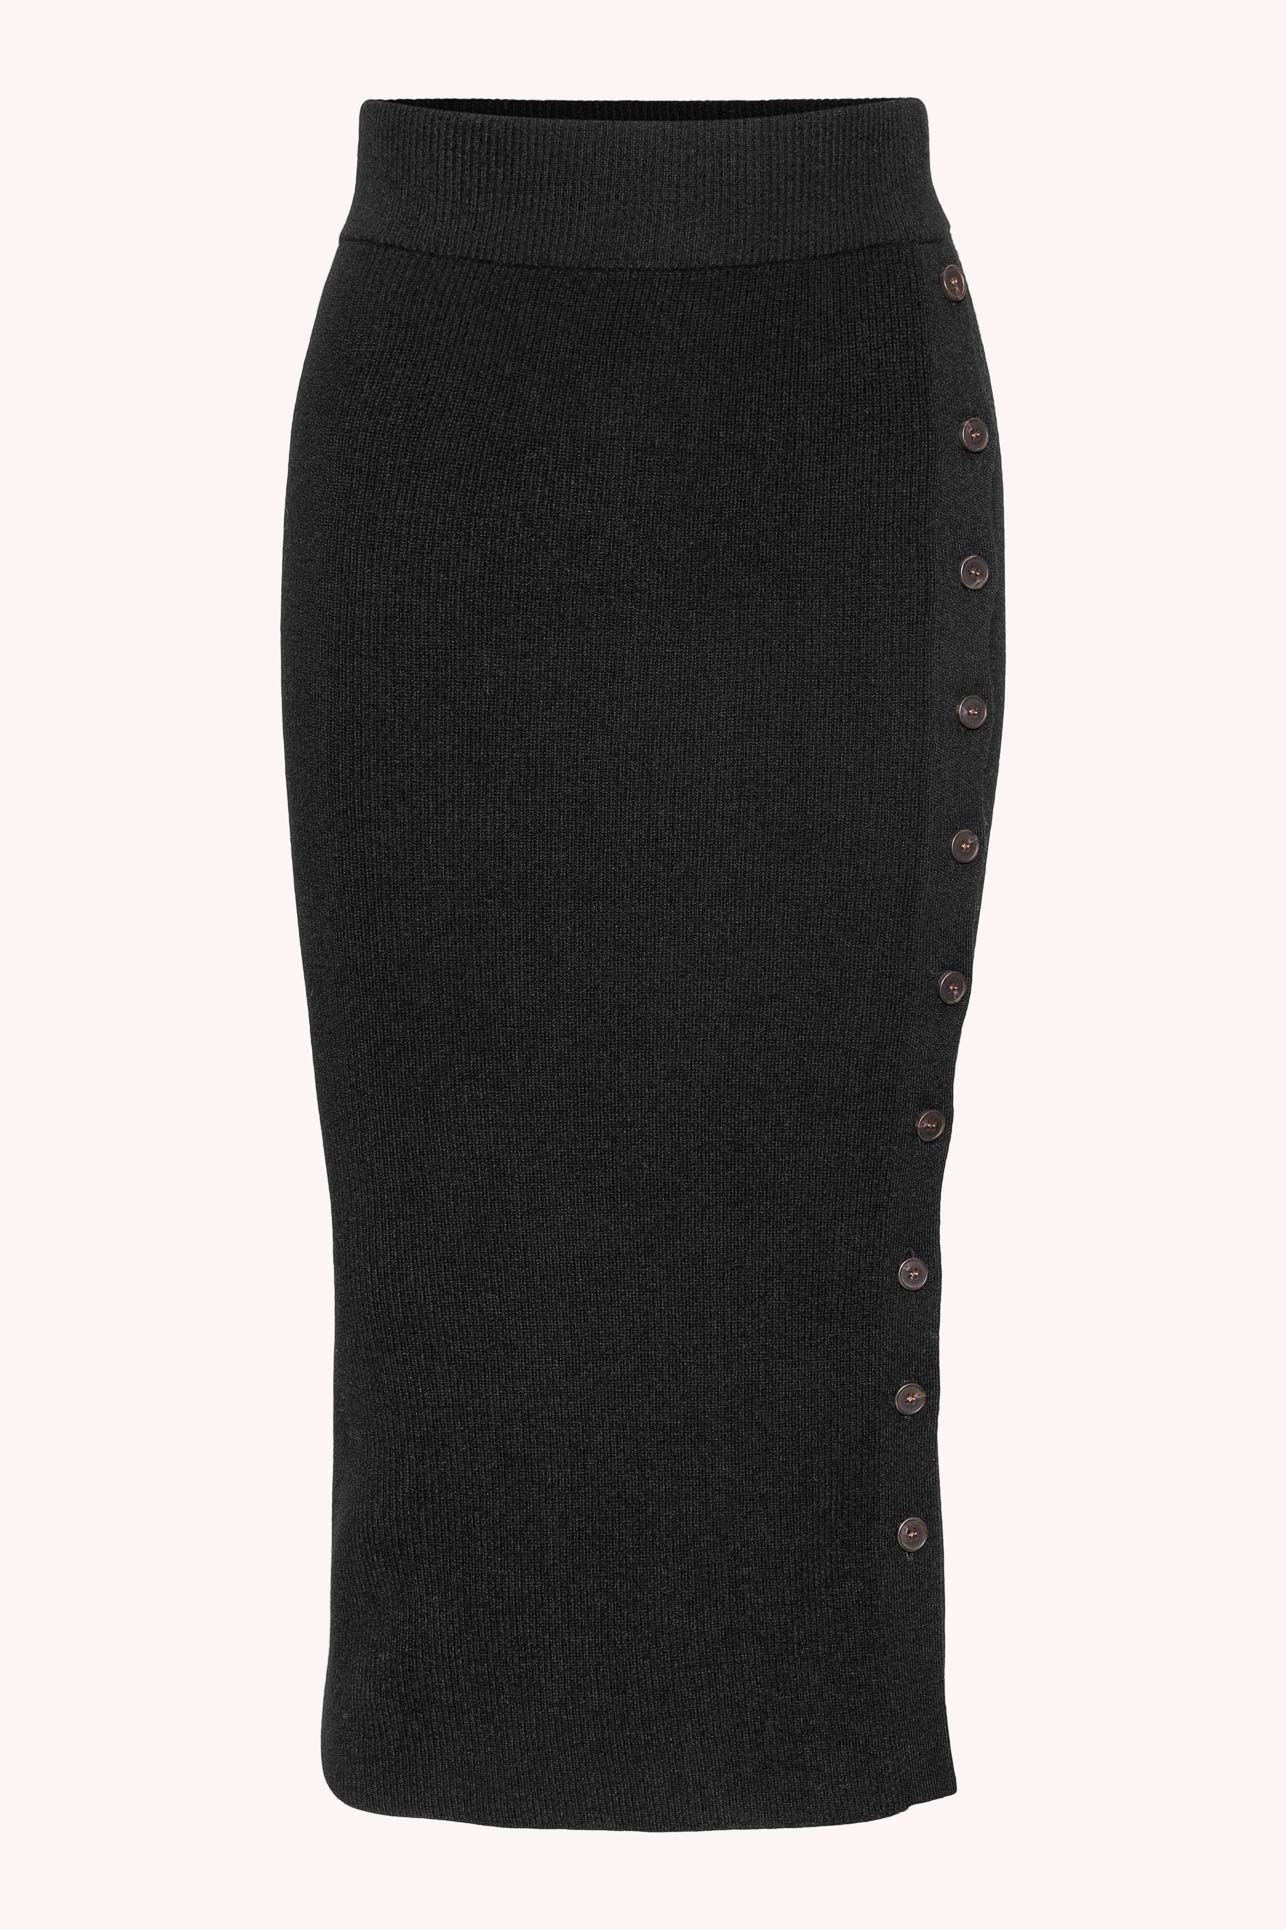 Sienna merino skirt - black